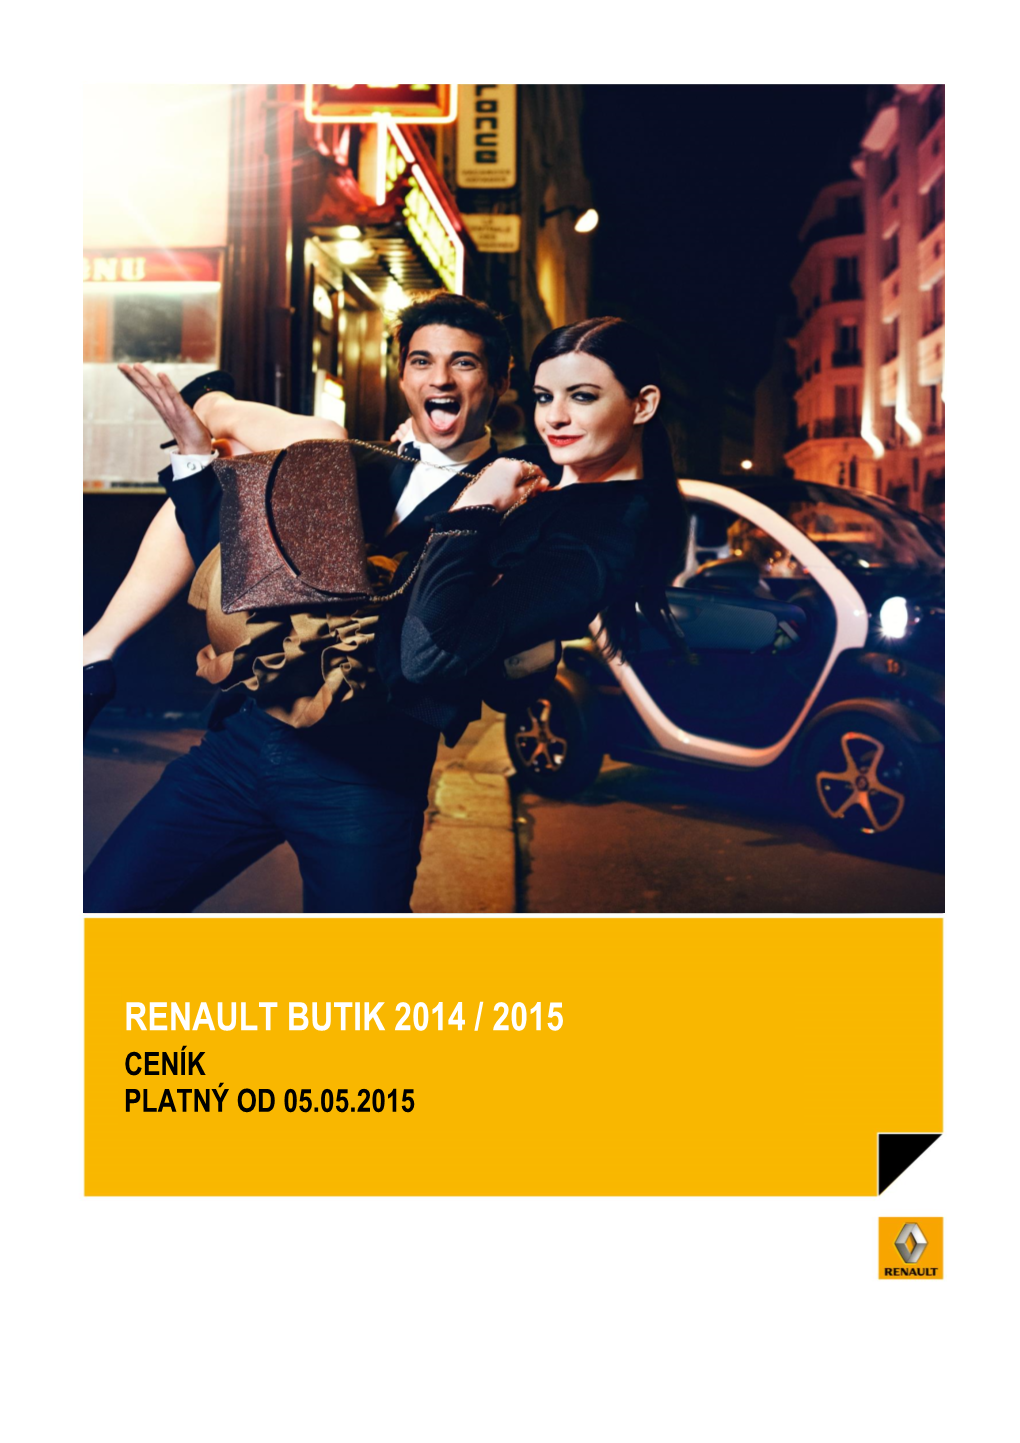 Renault Butik 2014 / 2015 Ceník Platný Od 05.05.2015 Initiale Paris